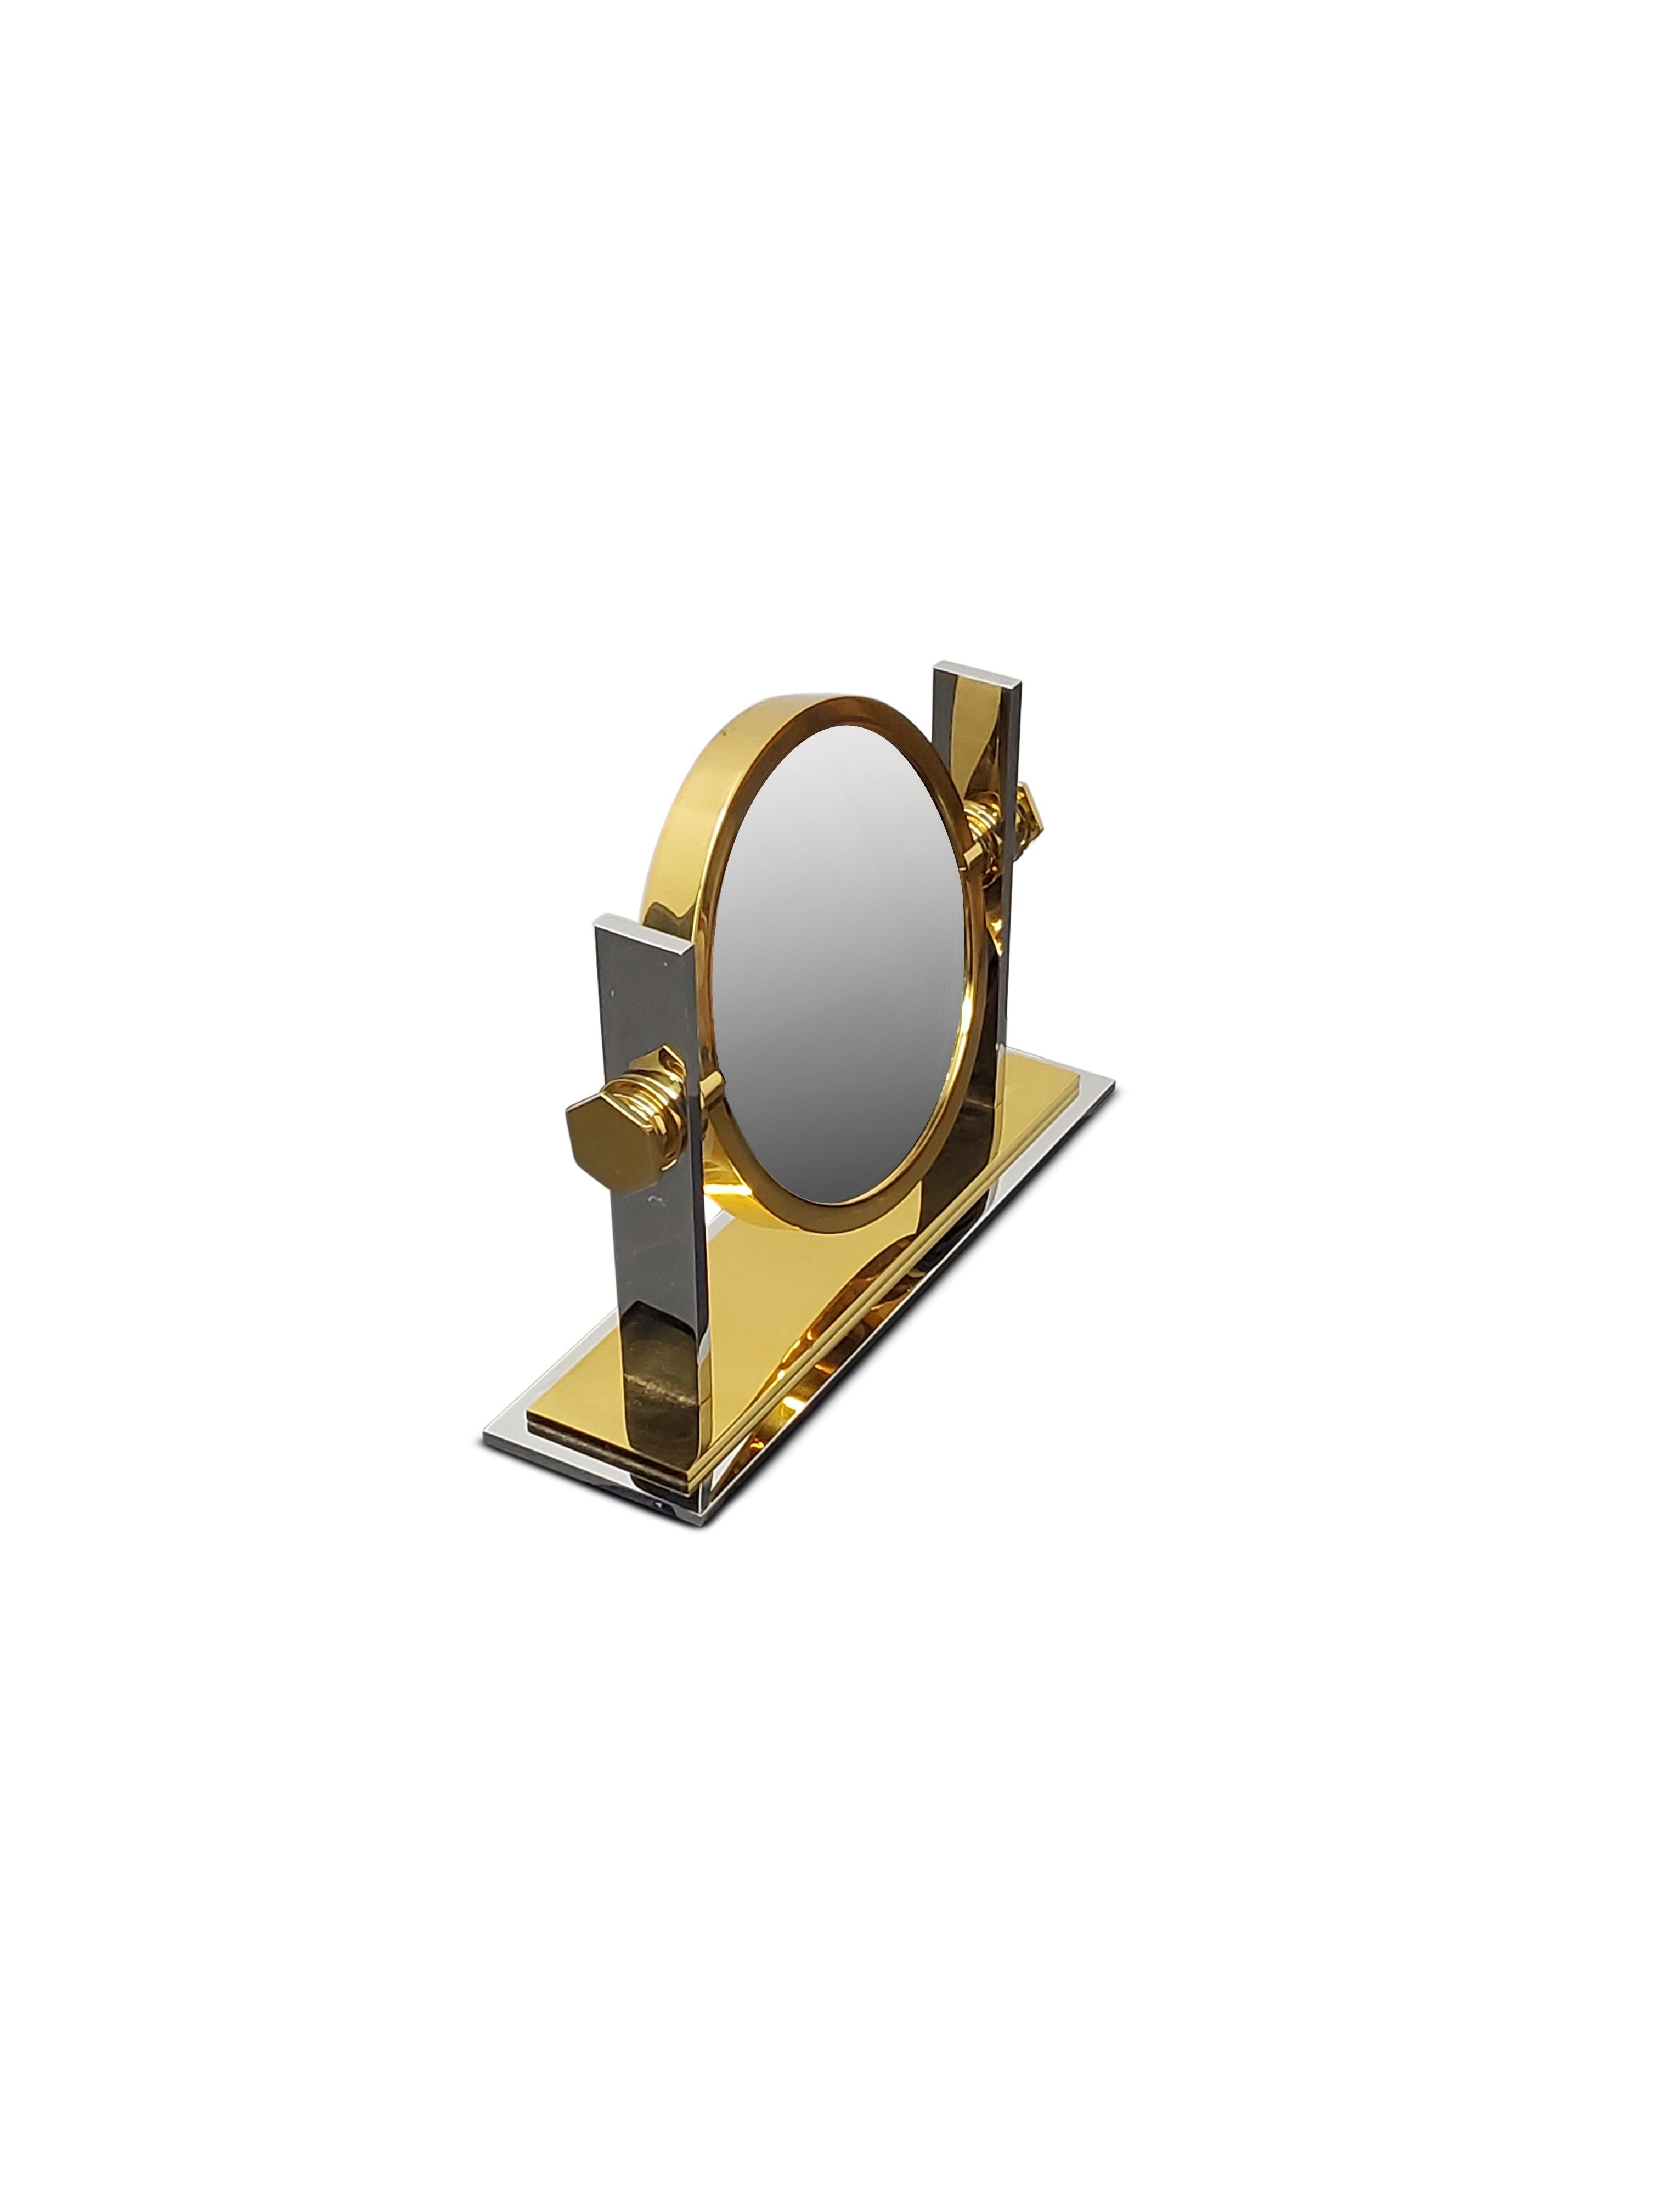 Karl Springer Brass and Nickel Vanity Mirror For Sale 7